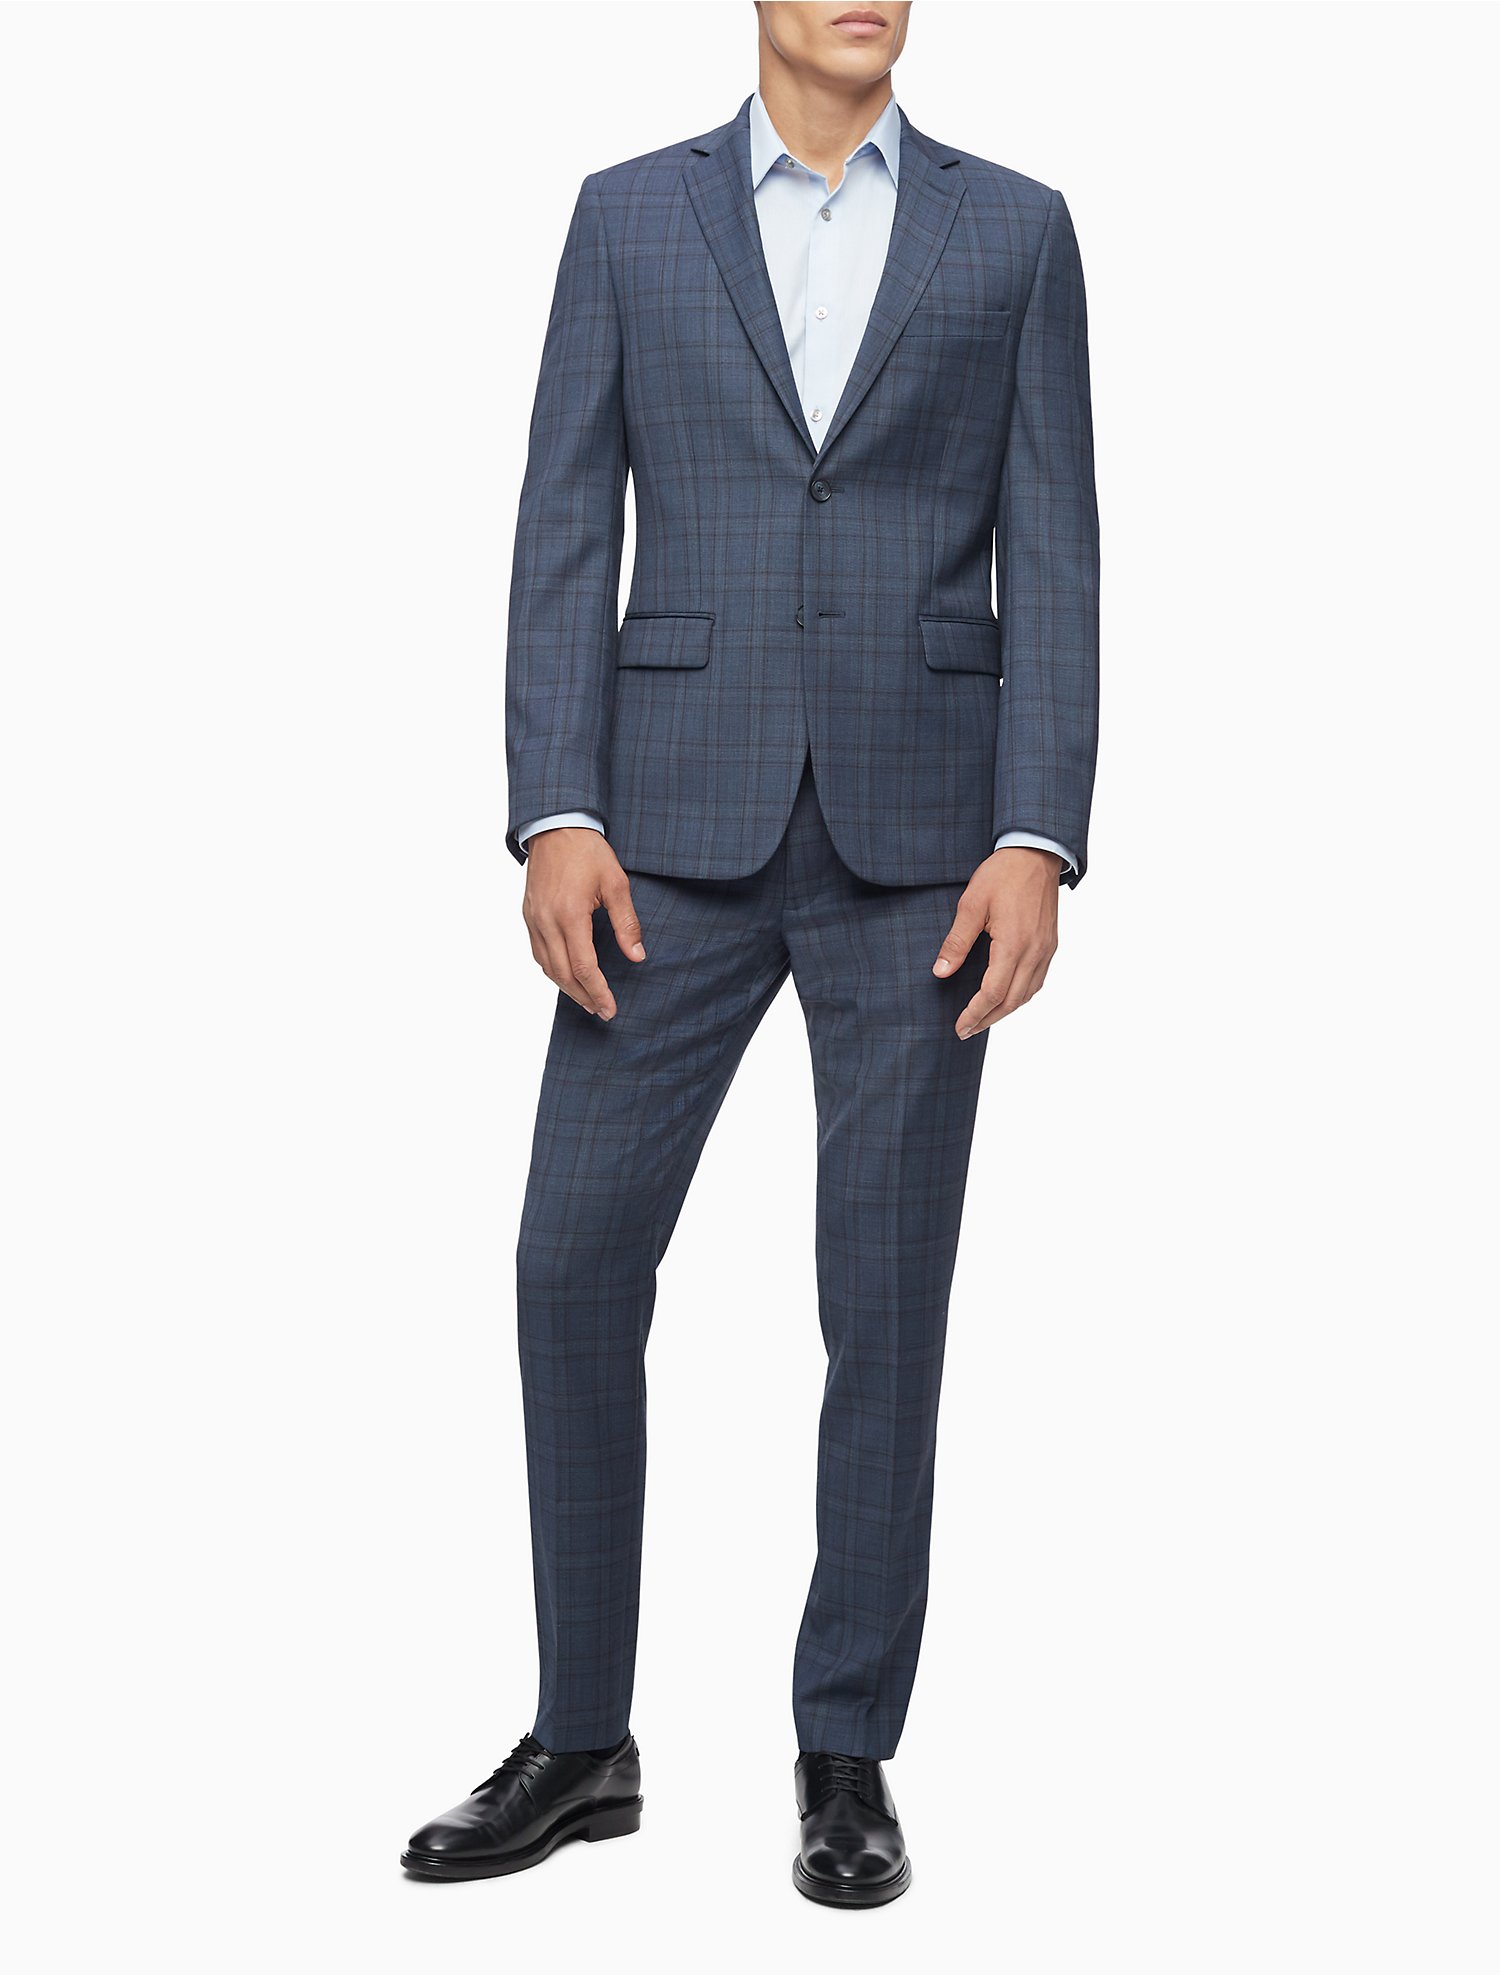 Introducir 52+ imagen calvin klein plaid suit